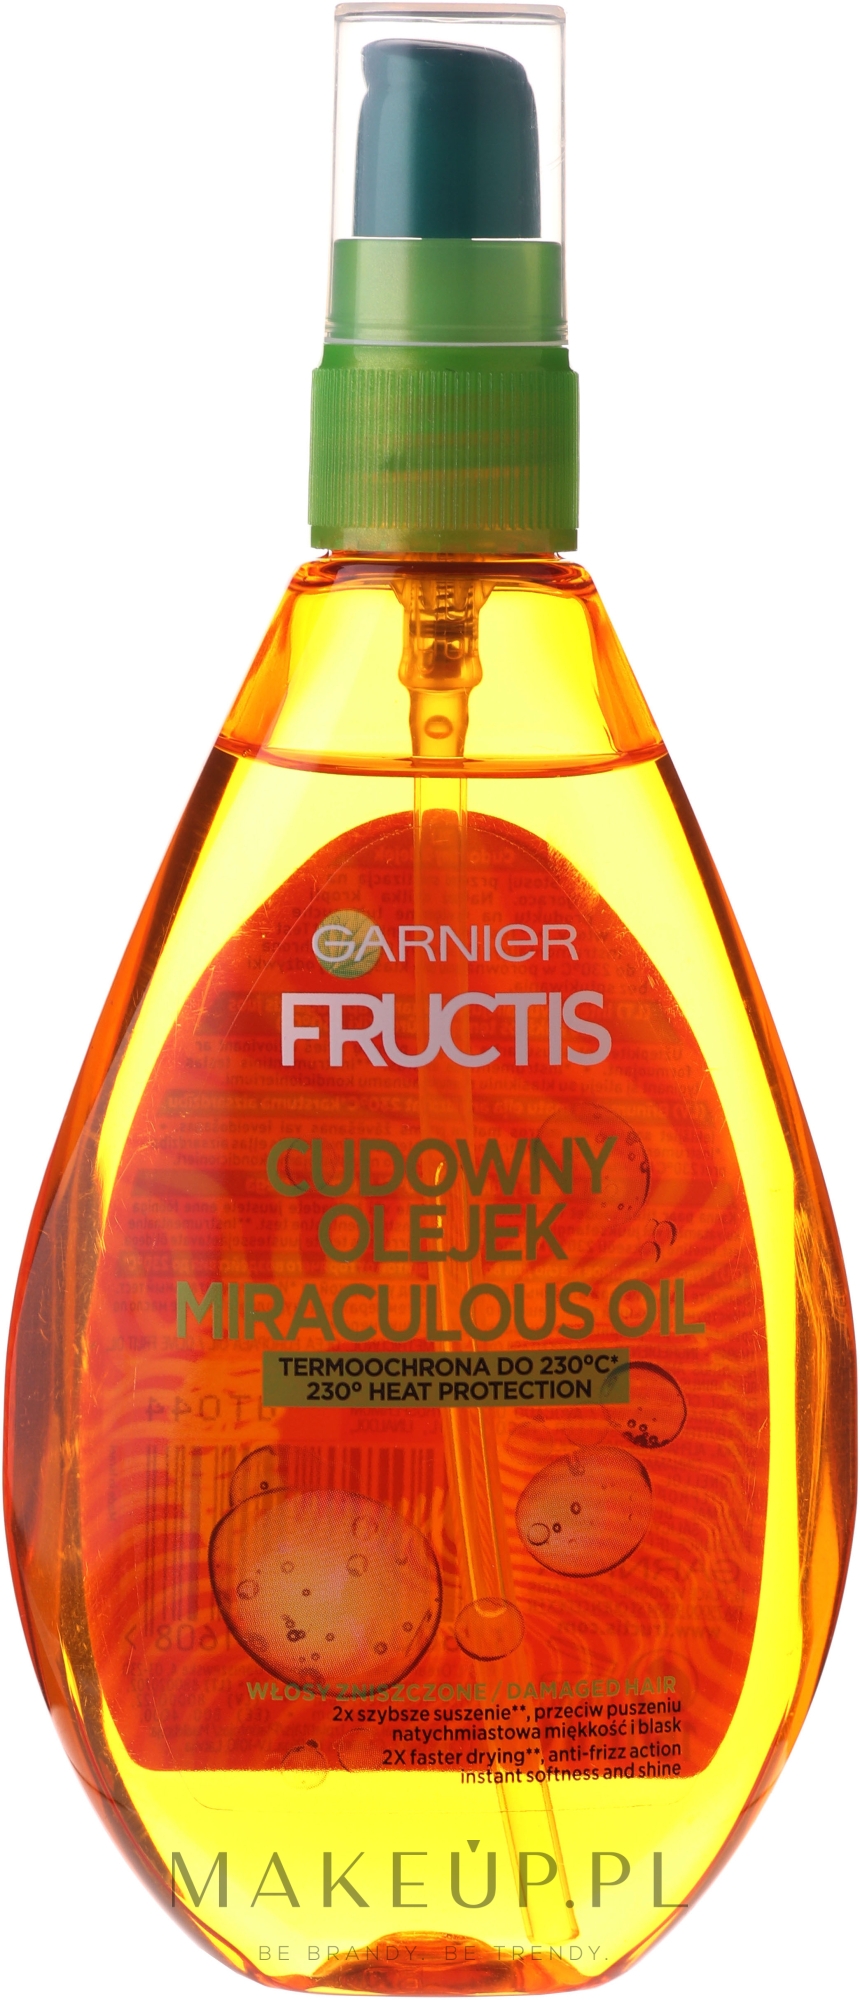 olejek garnier fructis do włosów